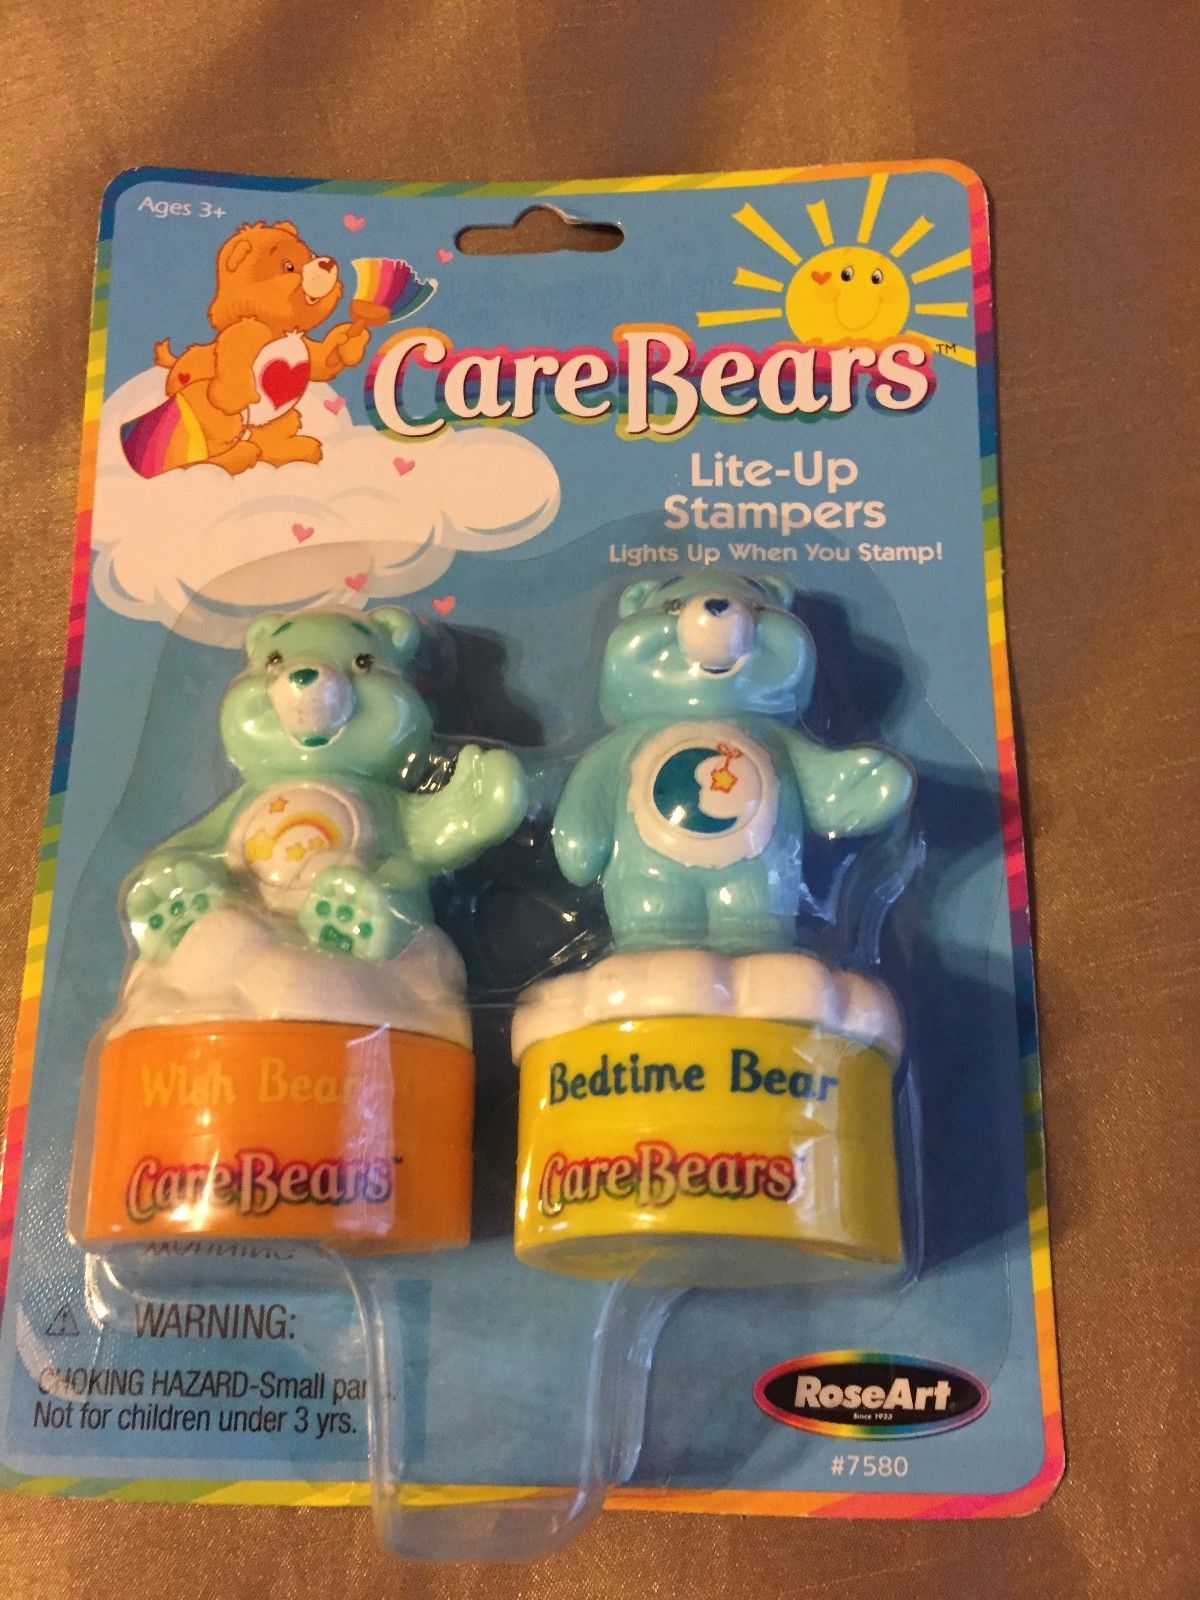 RARE Care Bears Vintage Lite up Stampers Set Rose Art Friend Cheer 2003 Toys for sale online 